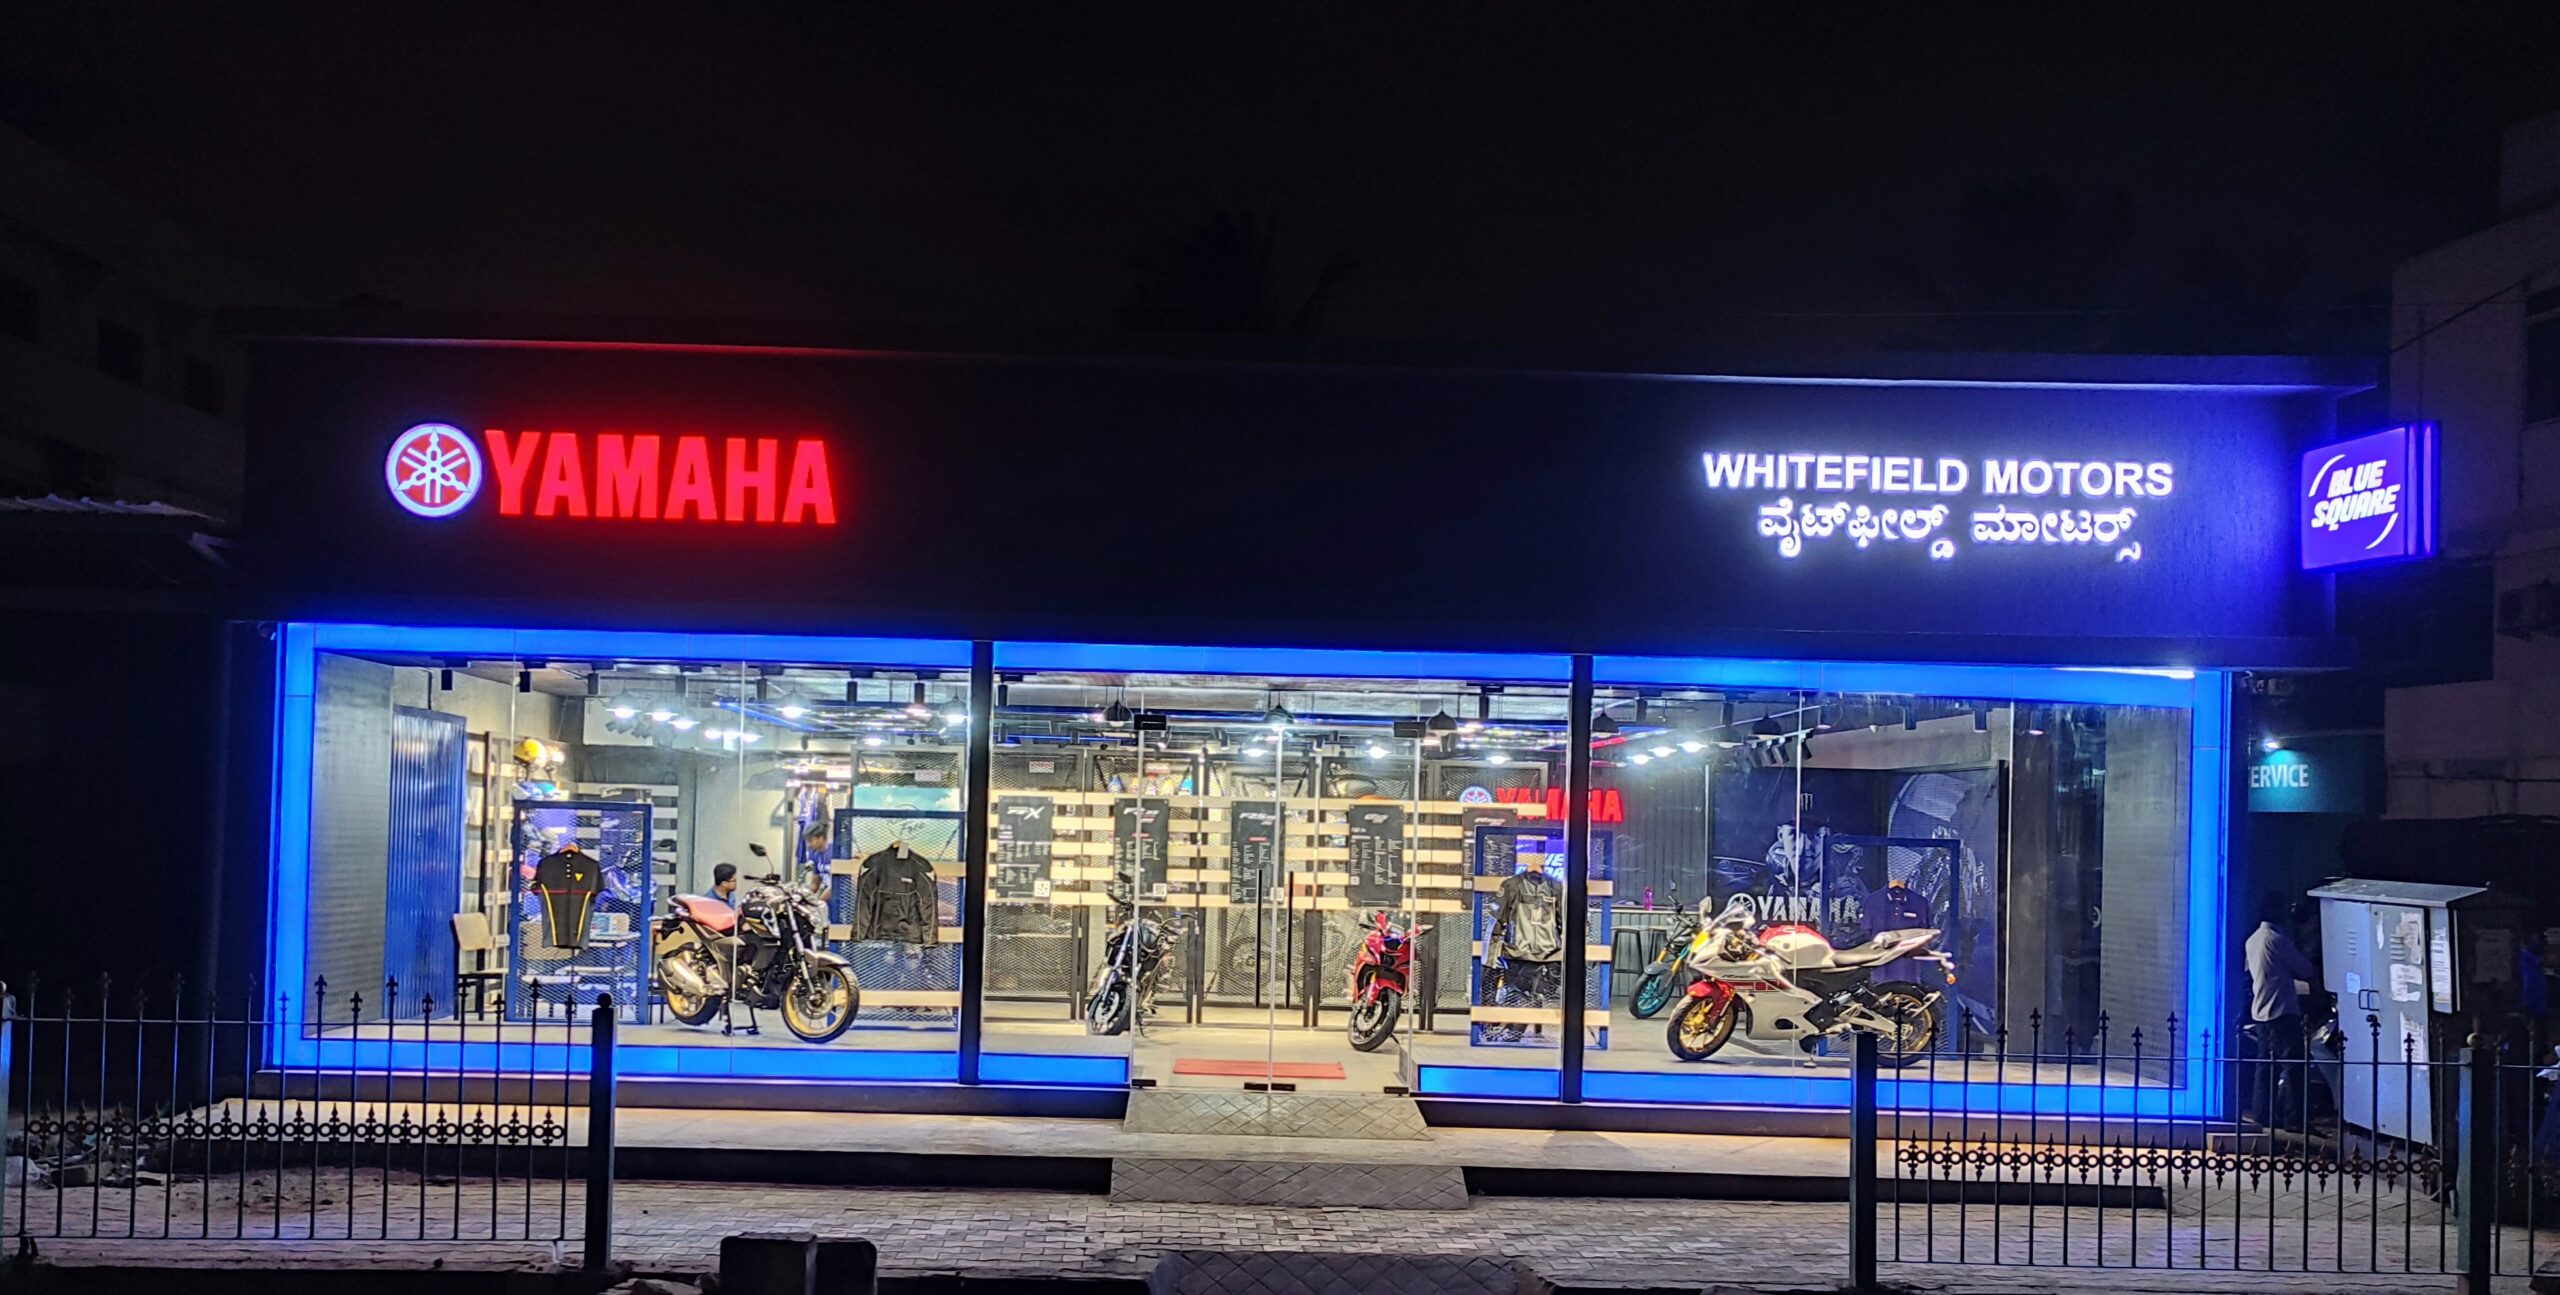 Yamaha Blue Square Bangalore Outlets Inaugurated In Premium Push!